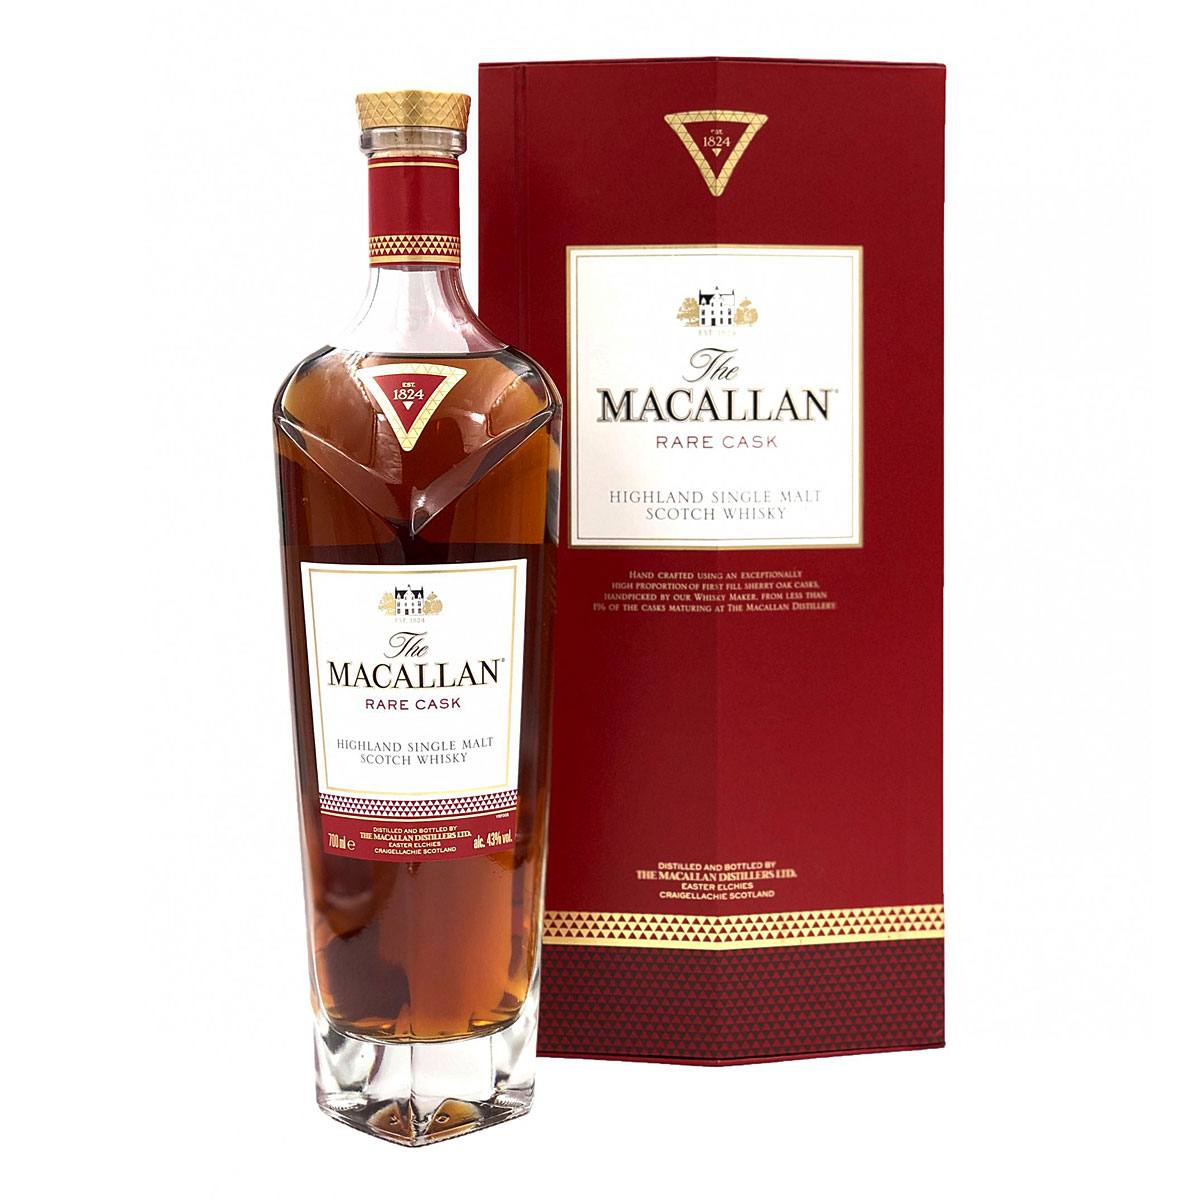 a bottle of macallan rare cask whisky